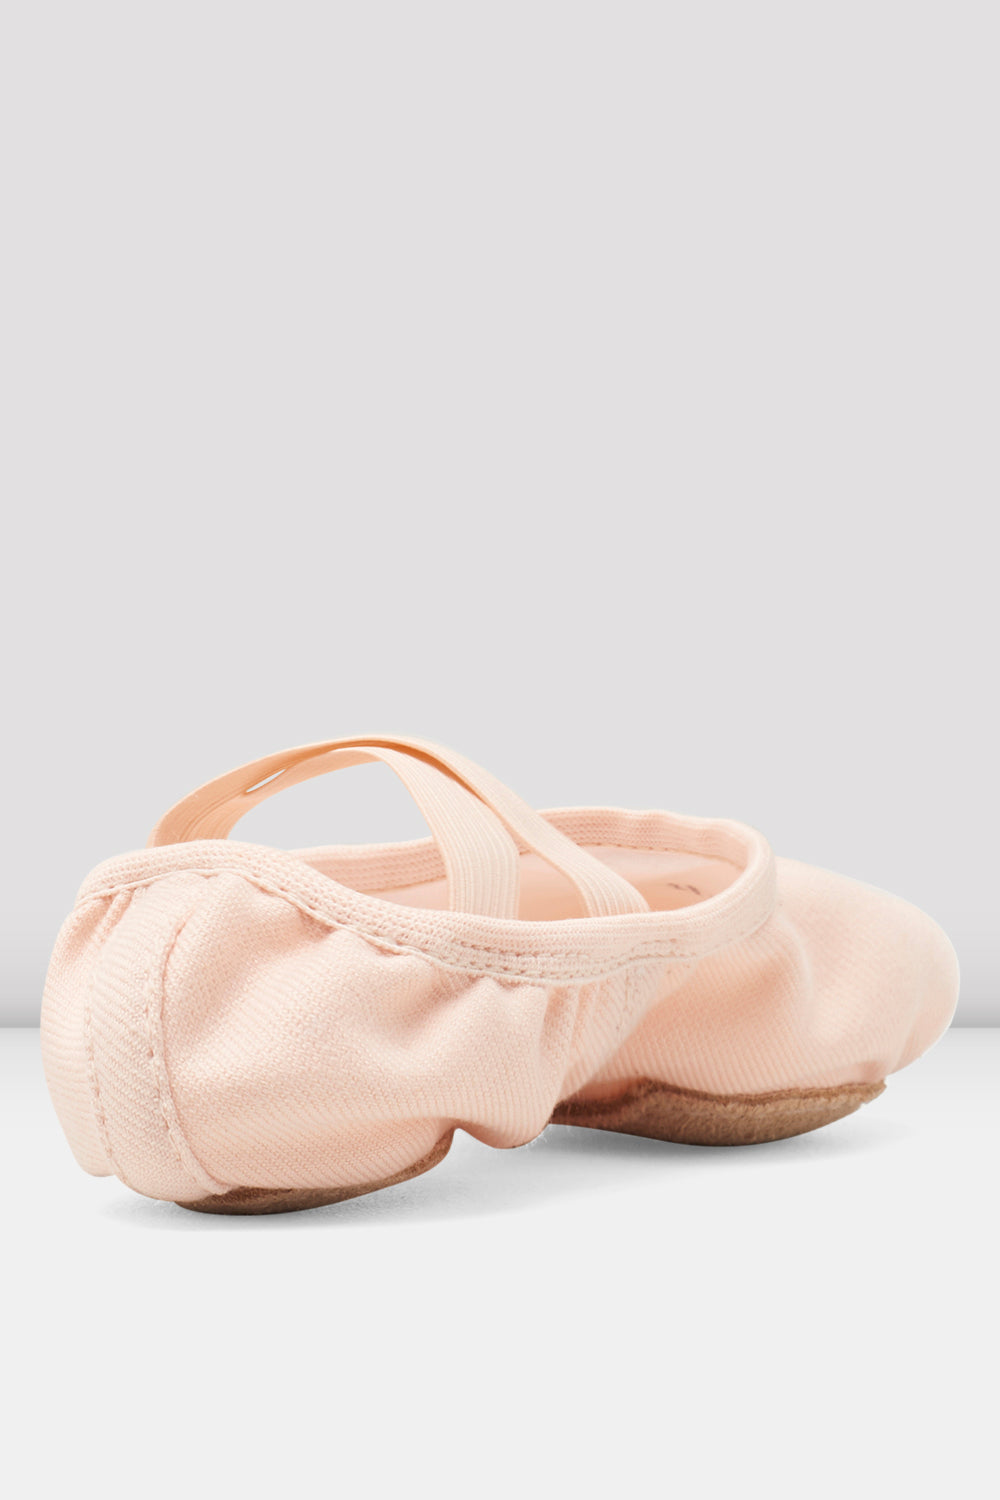 BLOCH Dance Women's Performa Shoe, Theatrical Pink, 3.5 D US